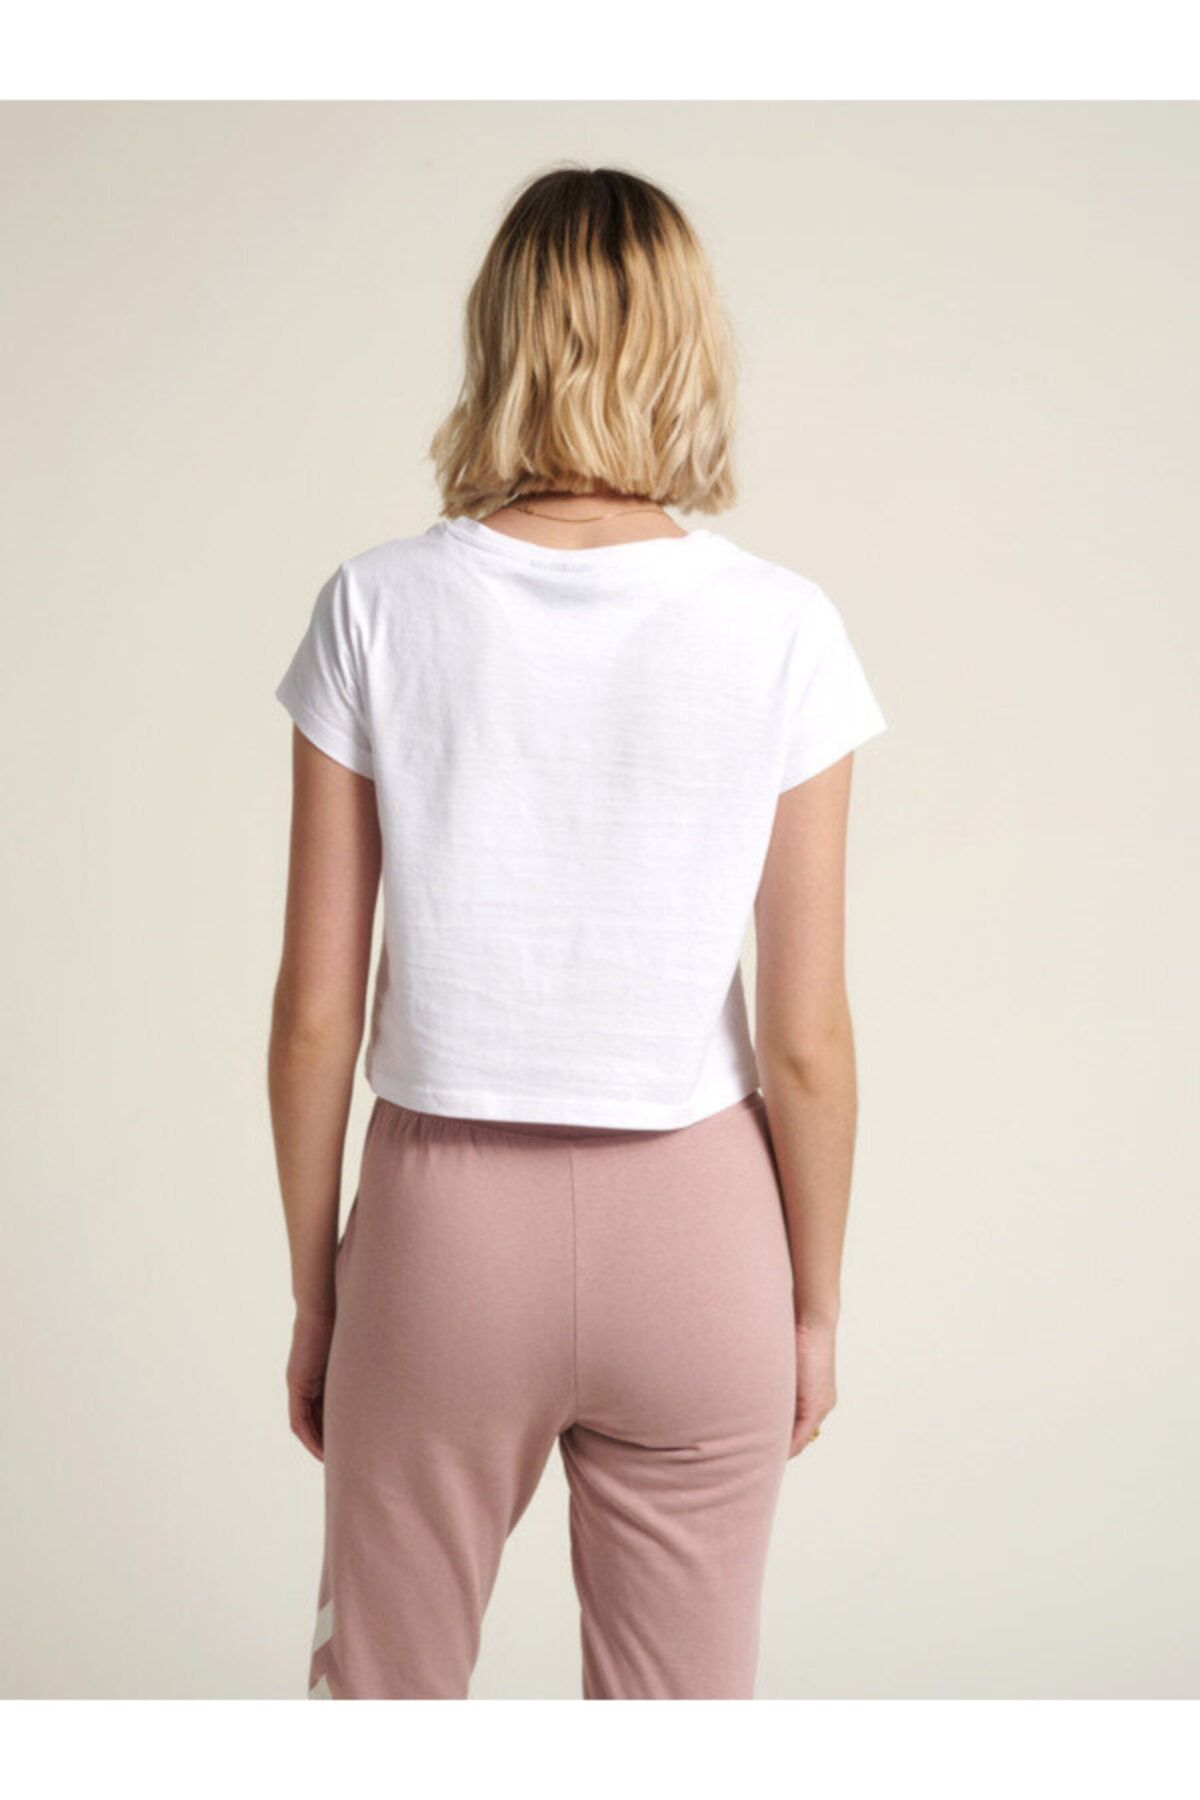 HUMMEL Legacy Woman Cropped T-Shirt Trendyol - Short Sleeve